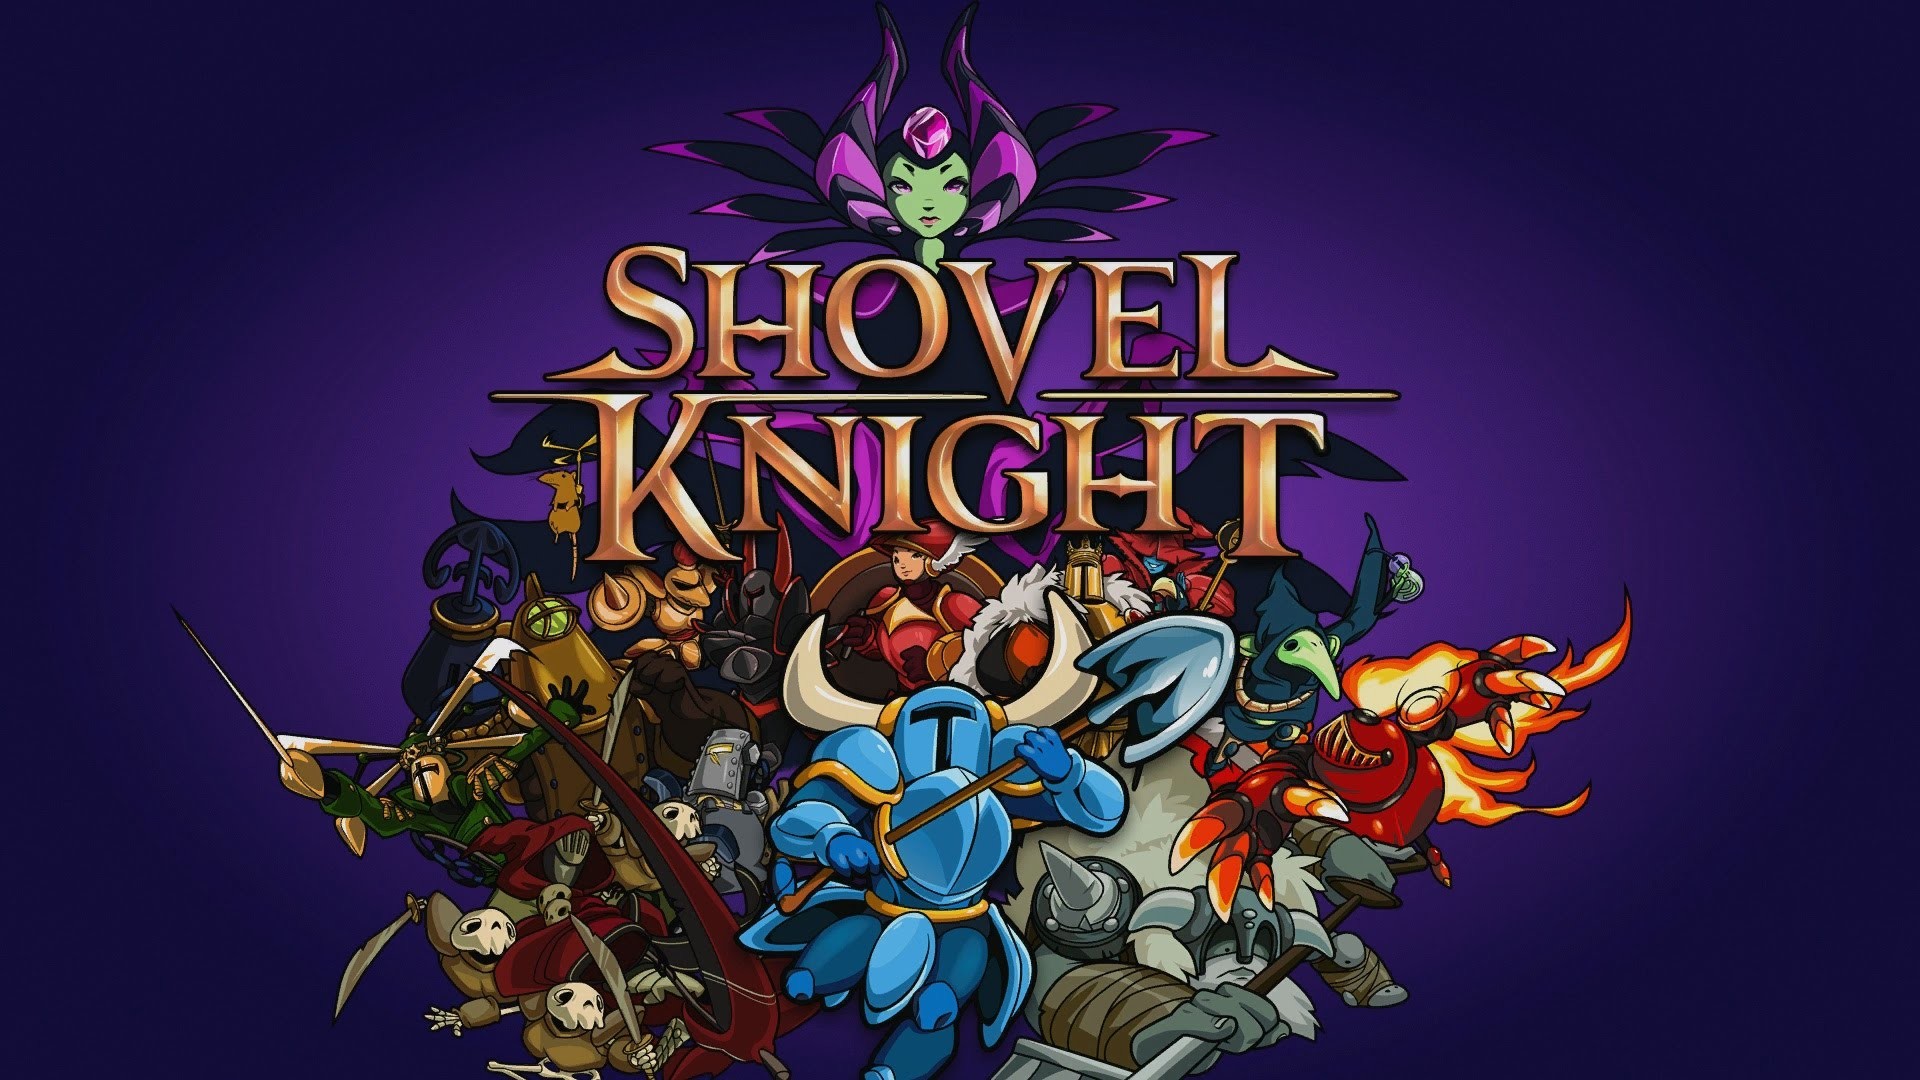 1920x1080 Shovel Knight para PlayStation 4 - PS4 - 1080p 60fps (ESPAÃOL) - YouTube